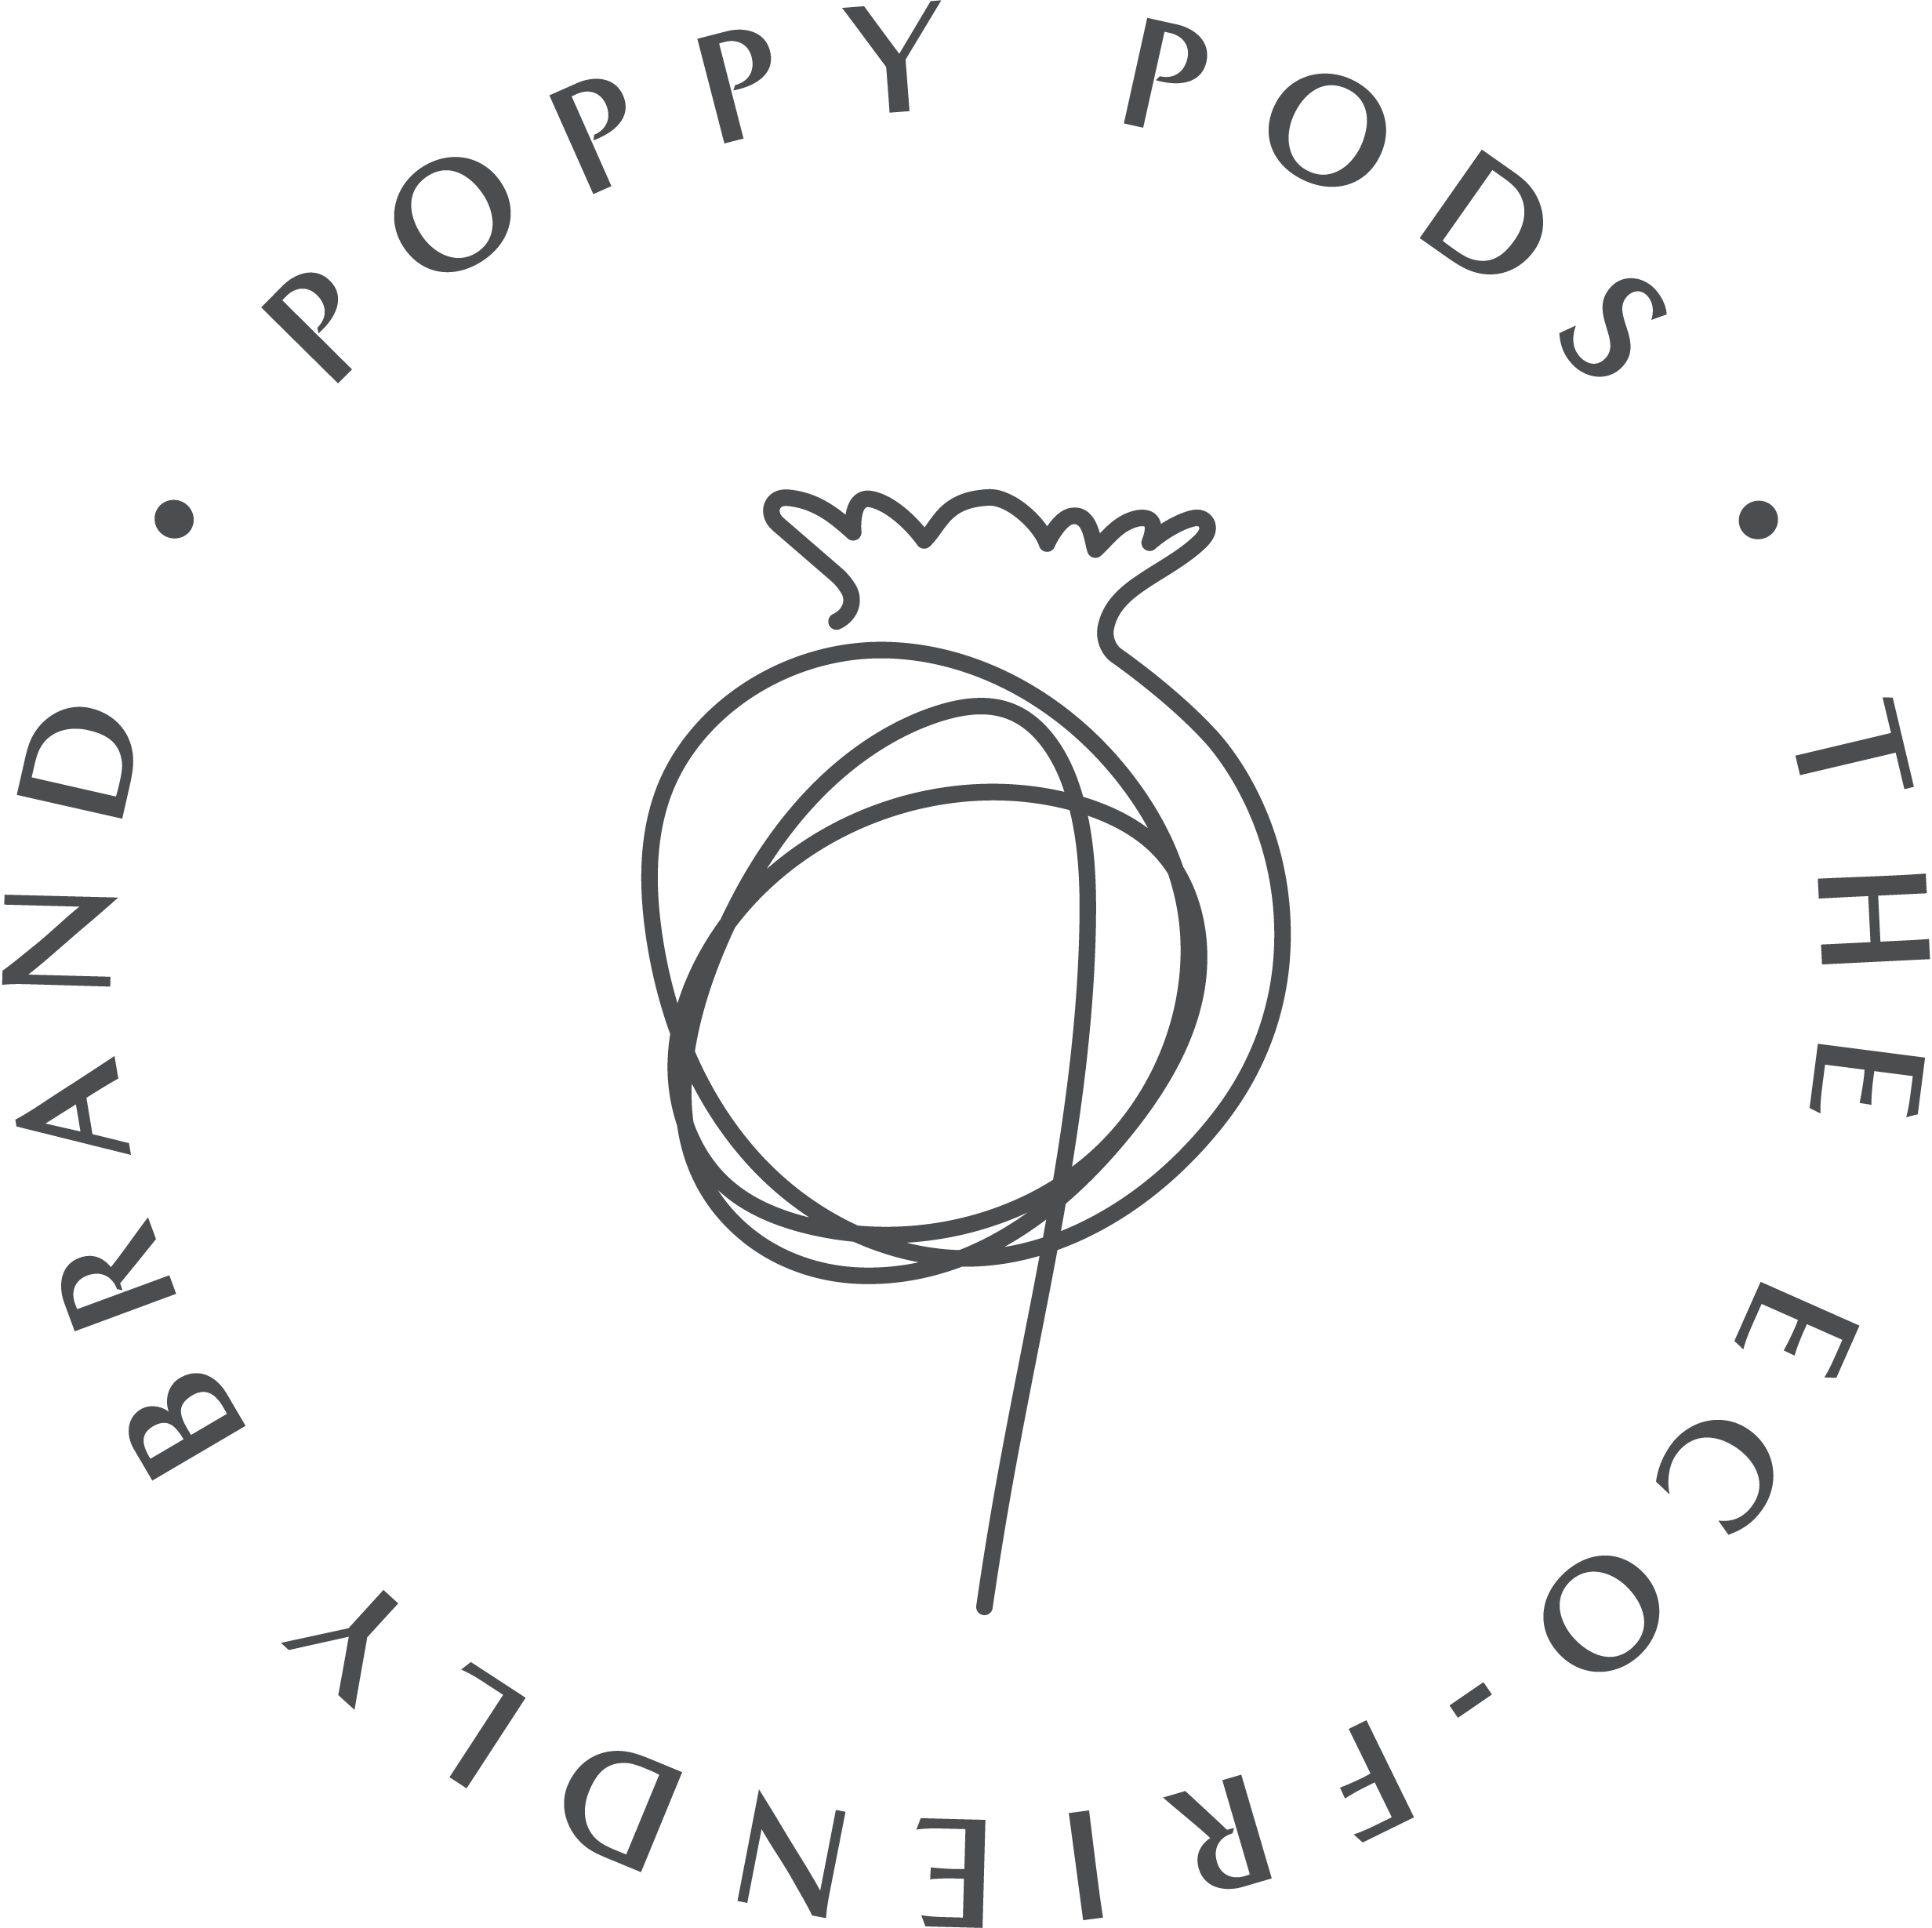 poppy-pods-zero-waste-webshop-logo-3